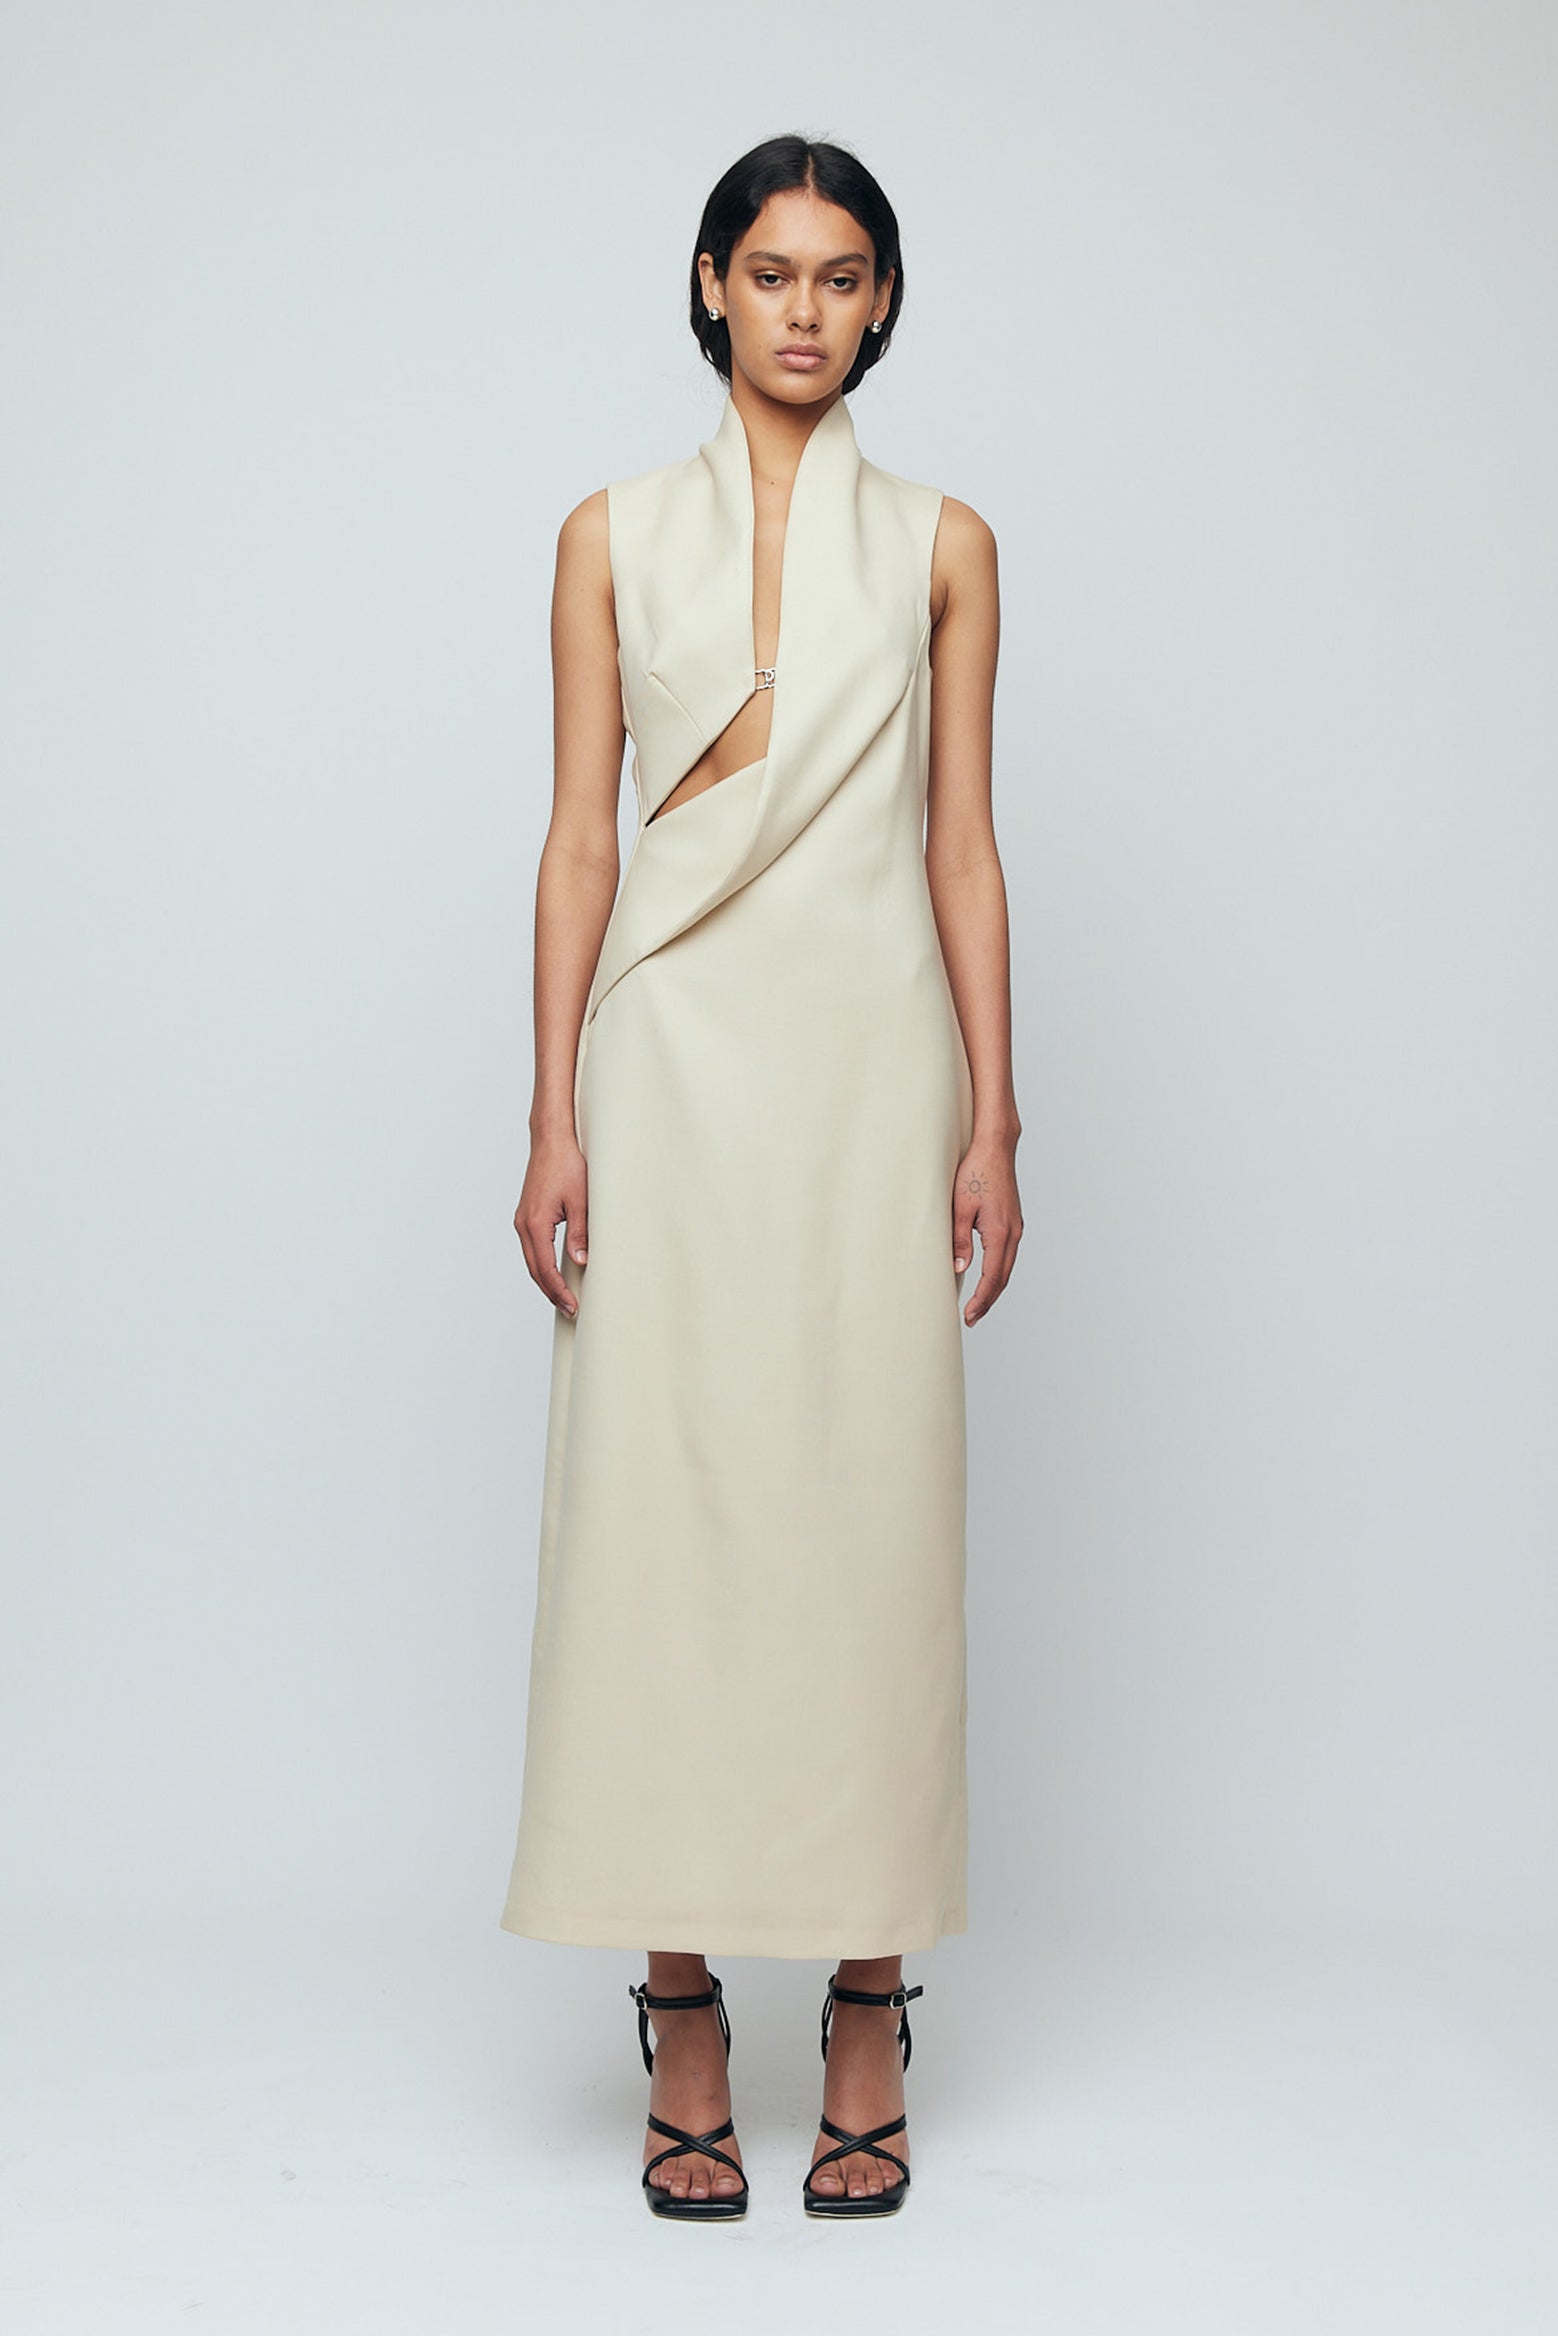 Wynn Hamlyn Harry Dress in Sand available at The New Trend Australia.